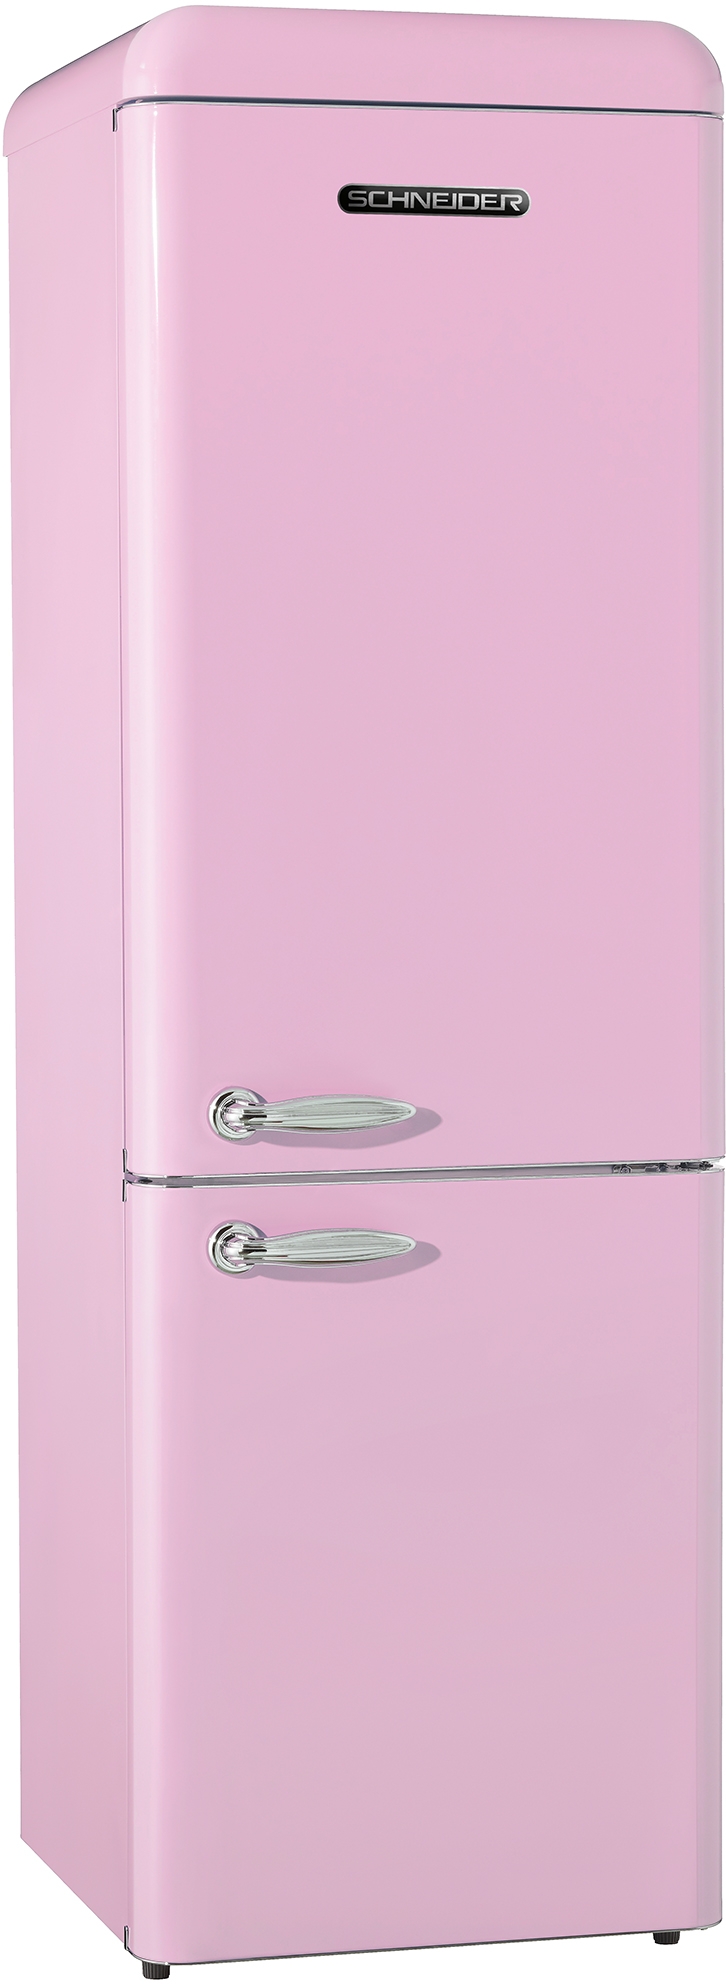 Schneider SL300SP CB koelkast roze De Schouw Witgoed